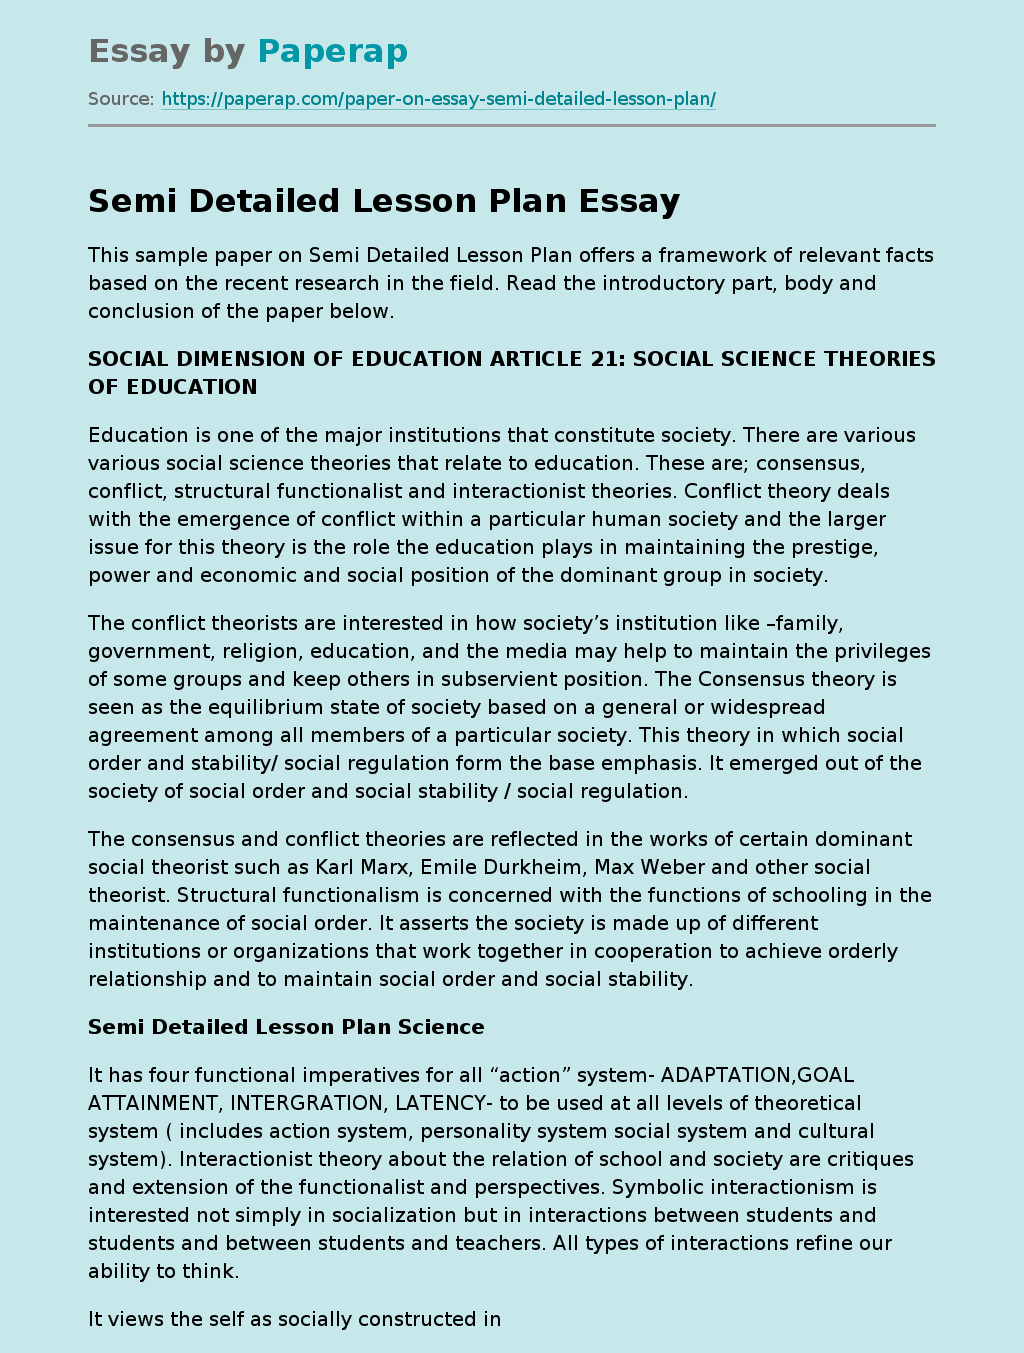 argumentative essay semi detailed lesson plan